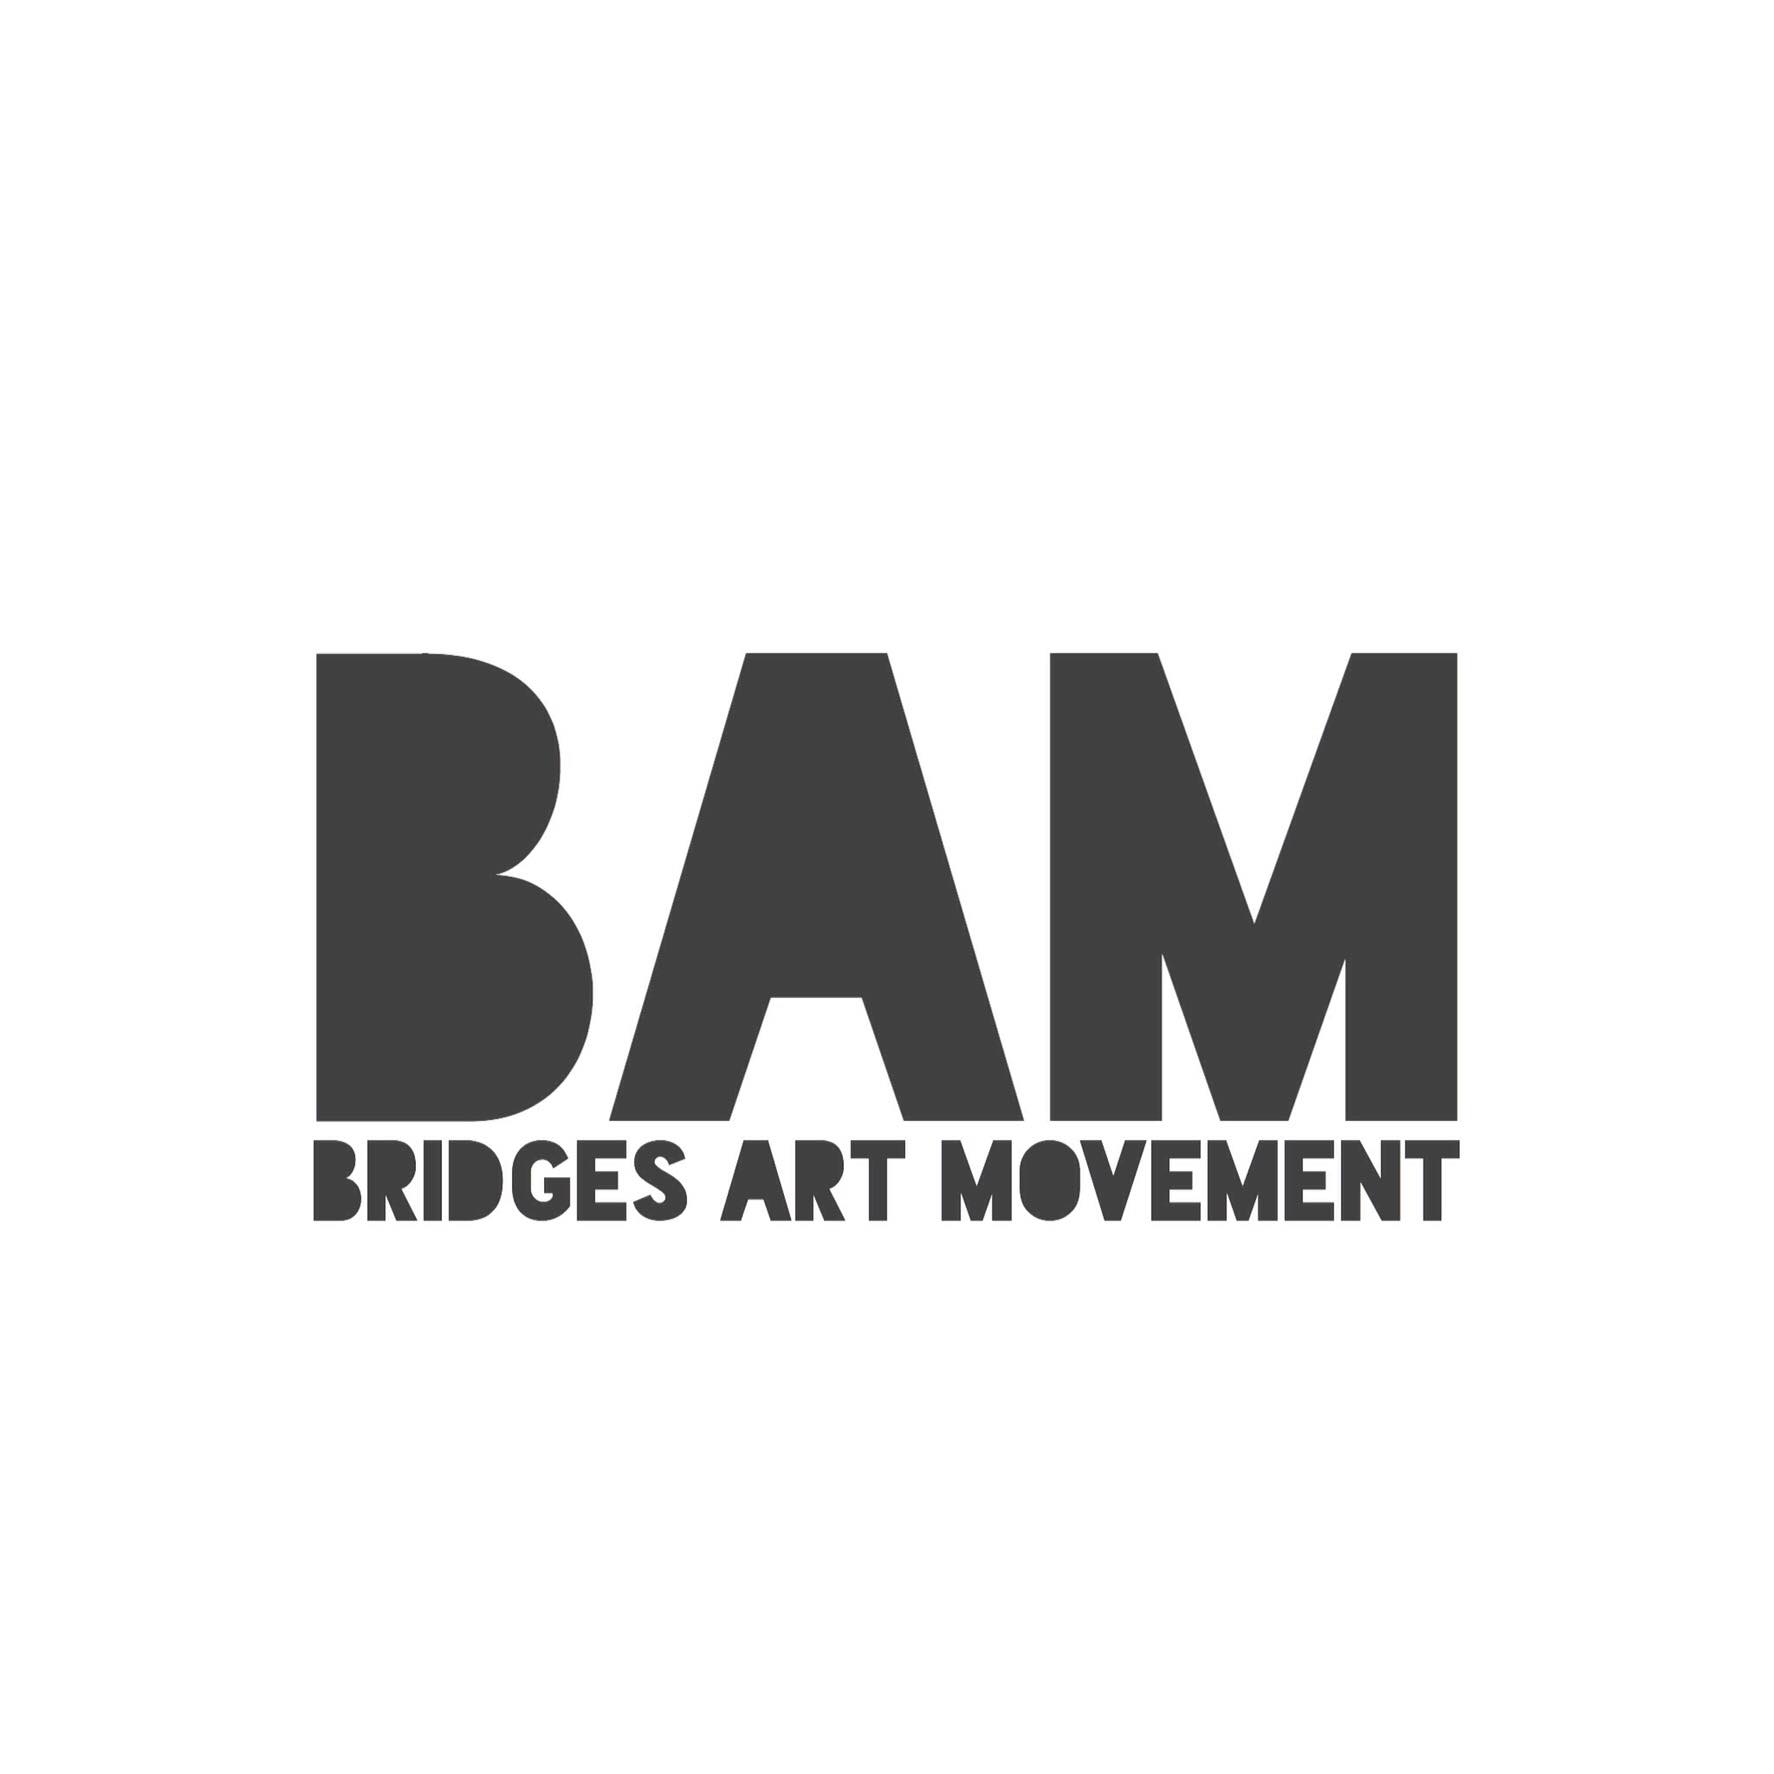 BAM (Bridges Art Movement)